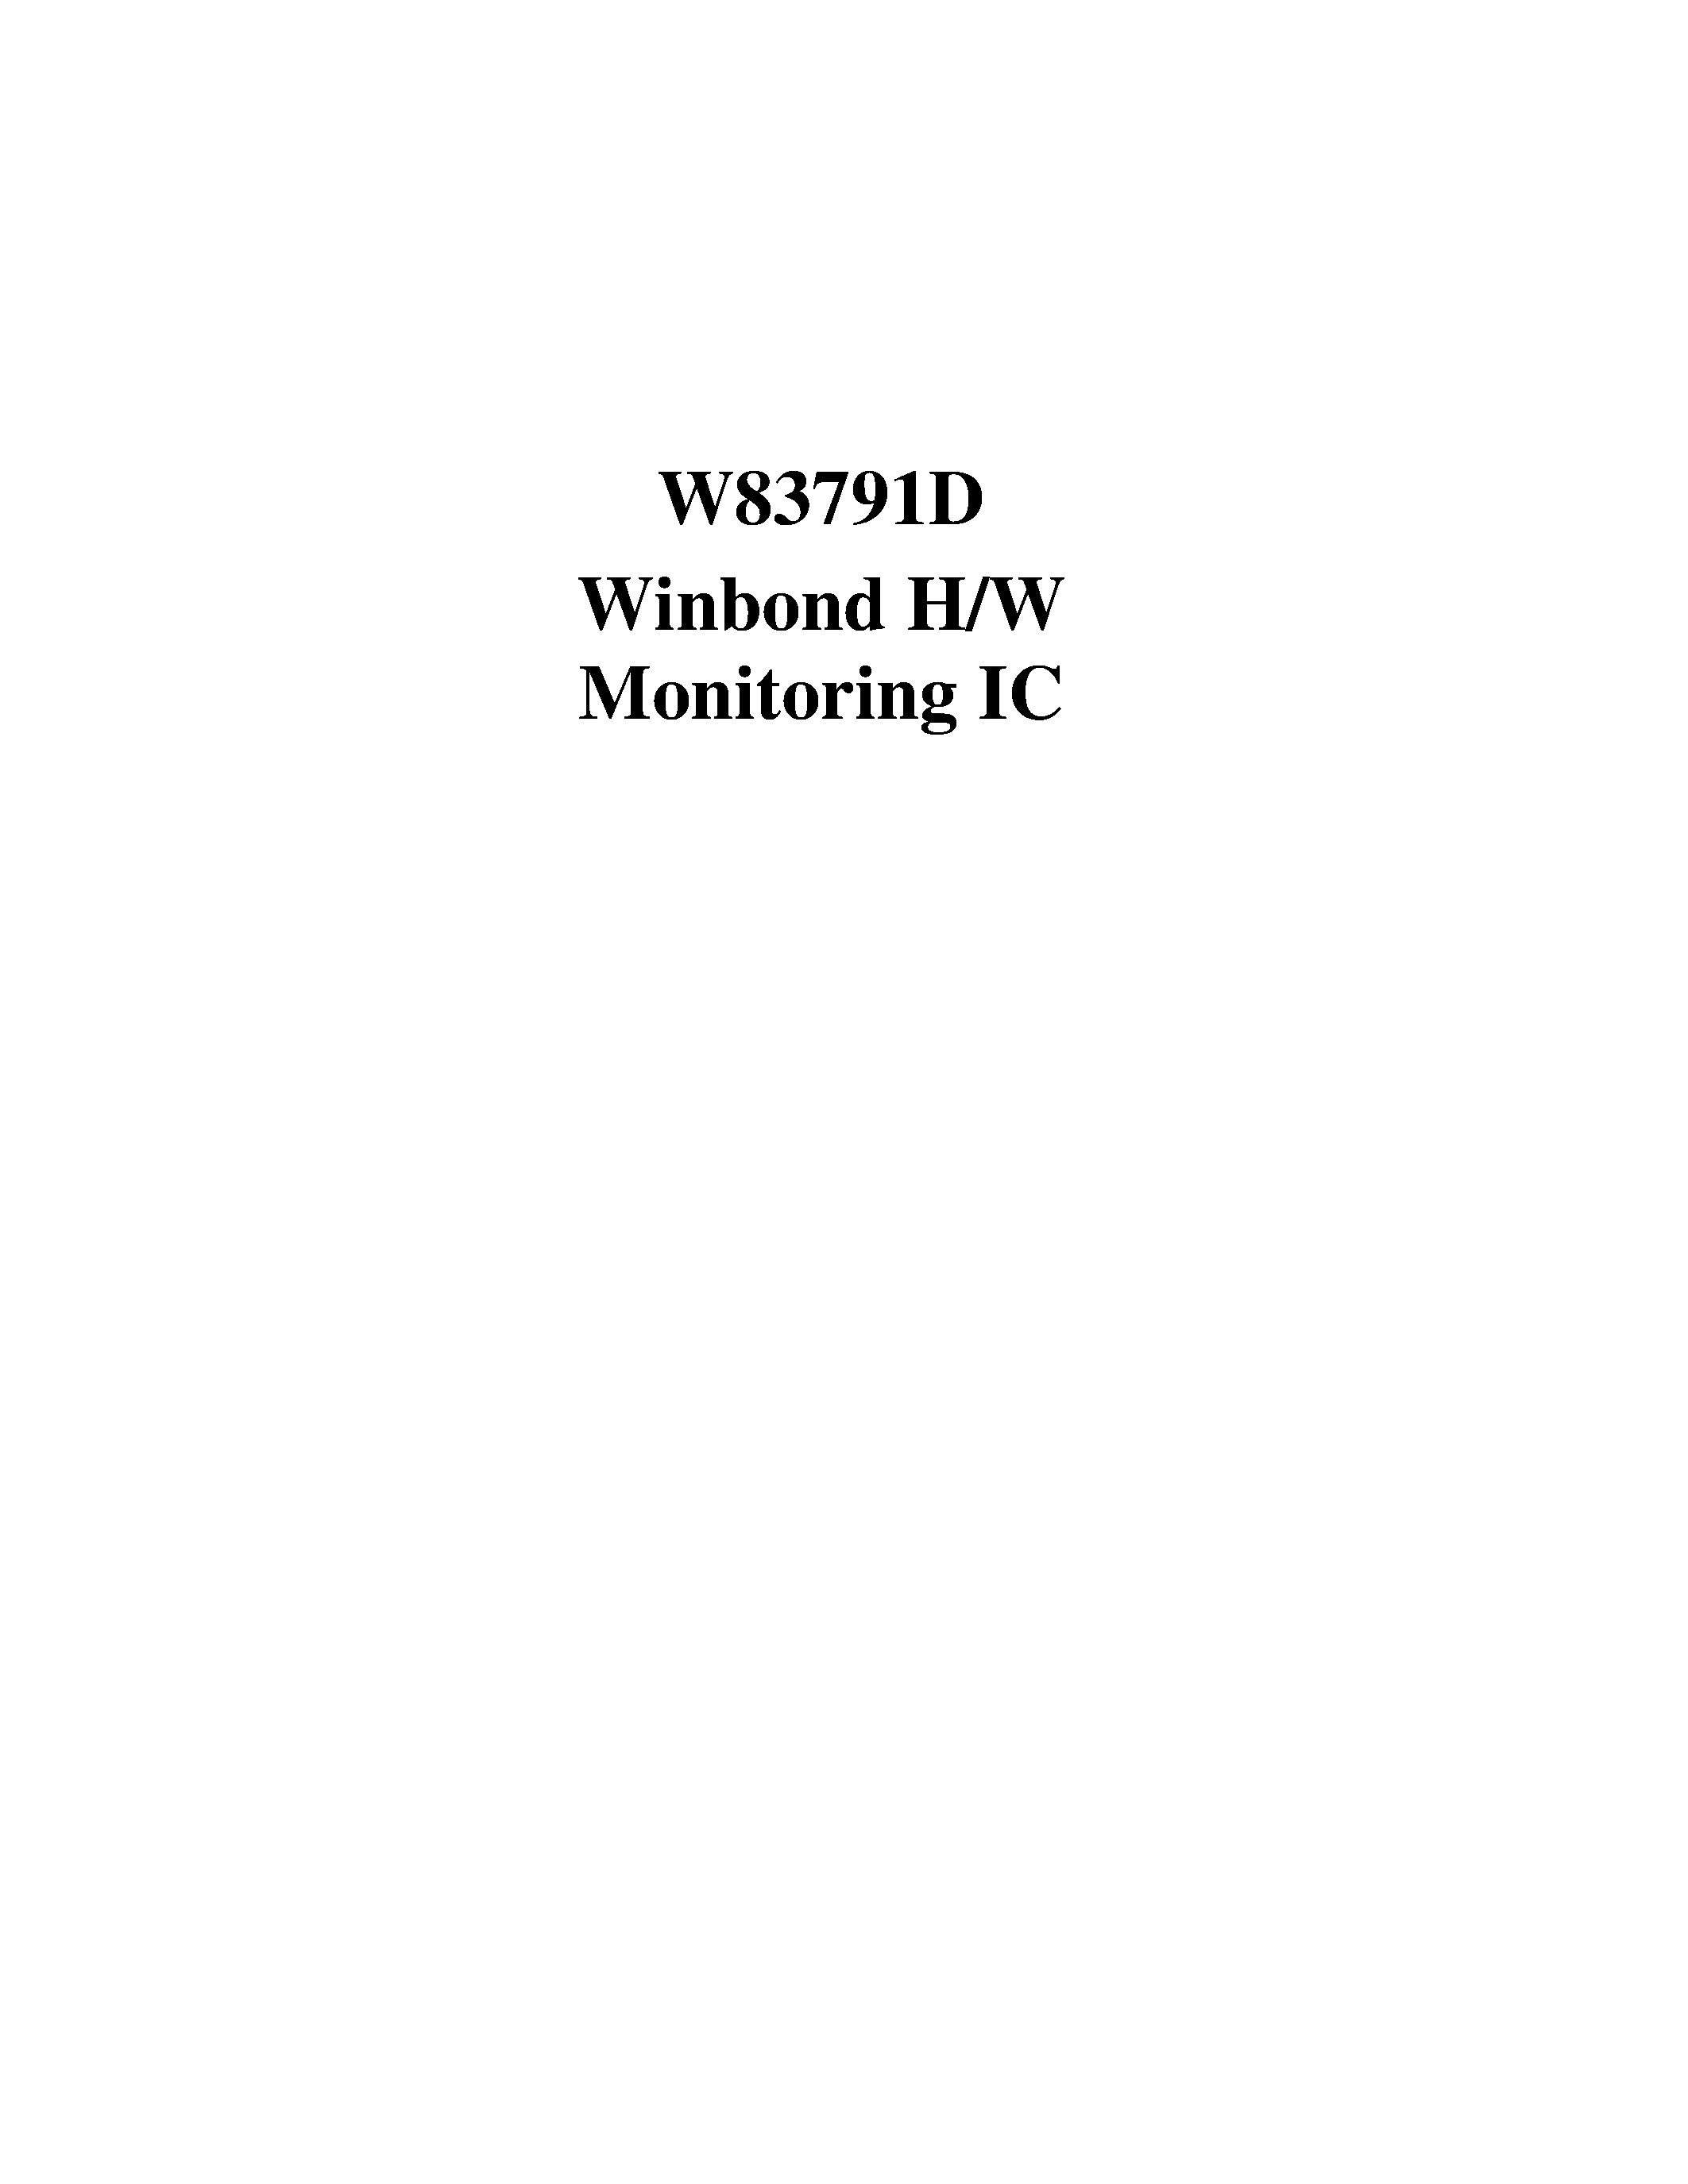 Datasheet W83791D - W83791D Winbond H/W Monitoring IC page 1